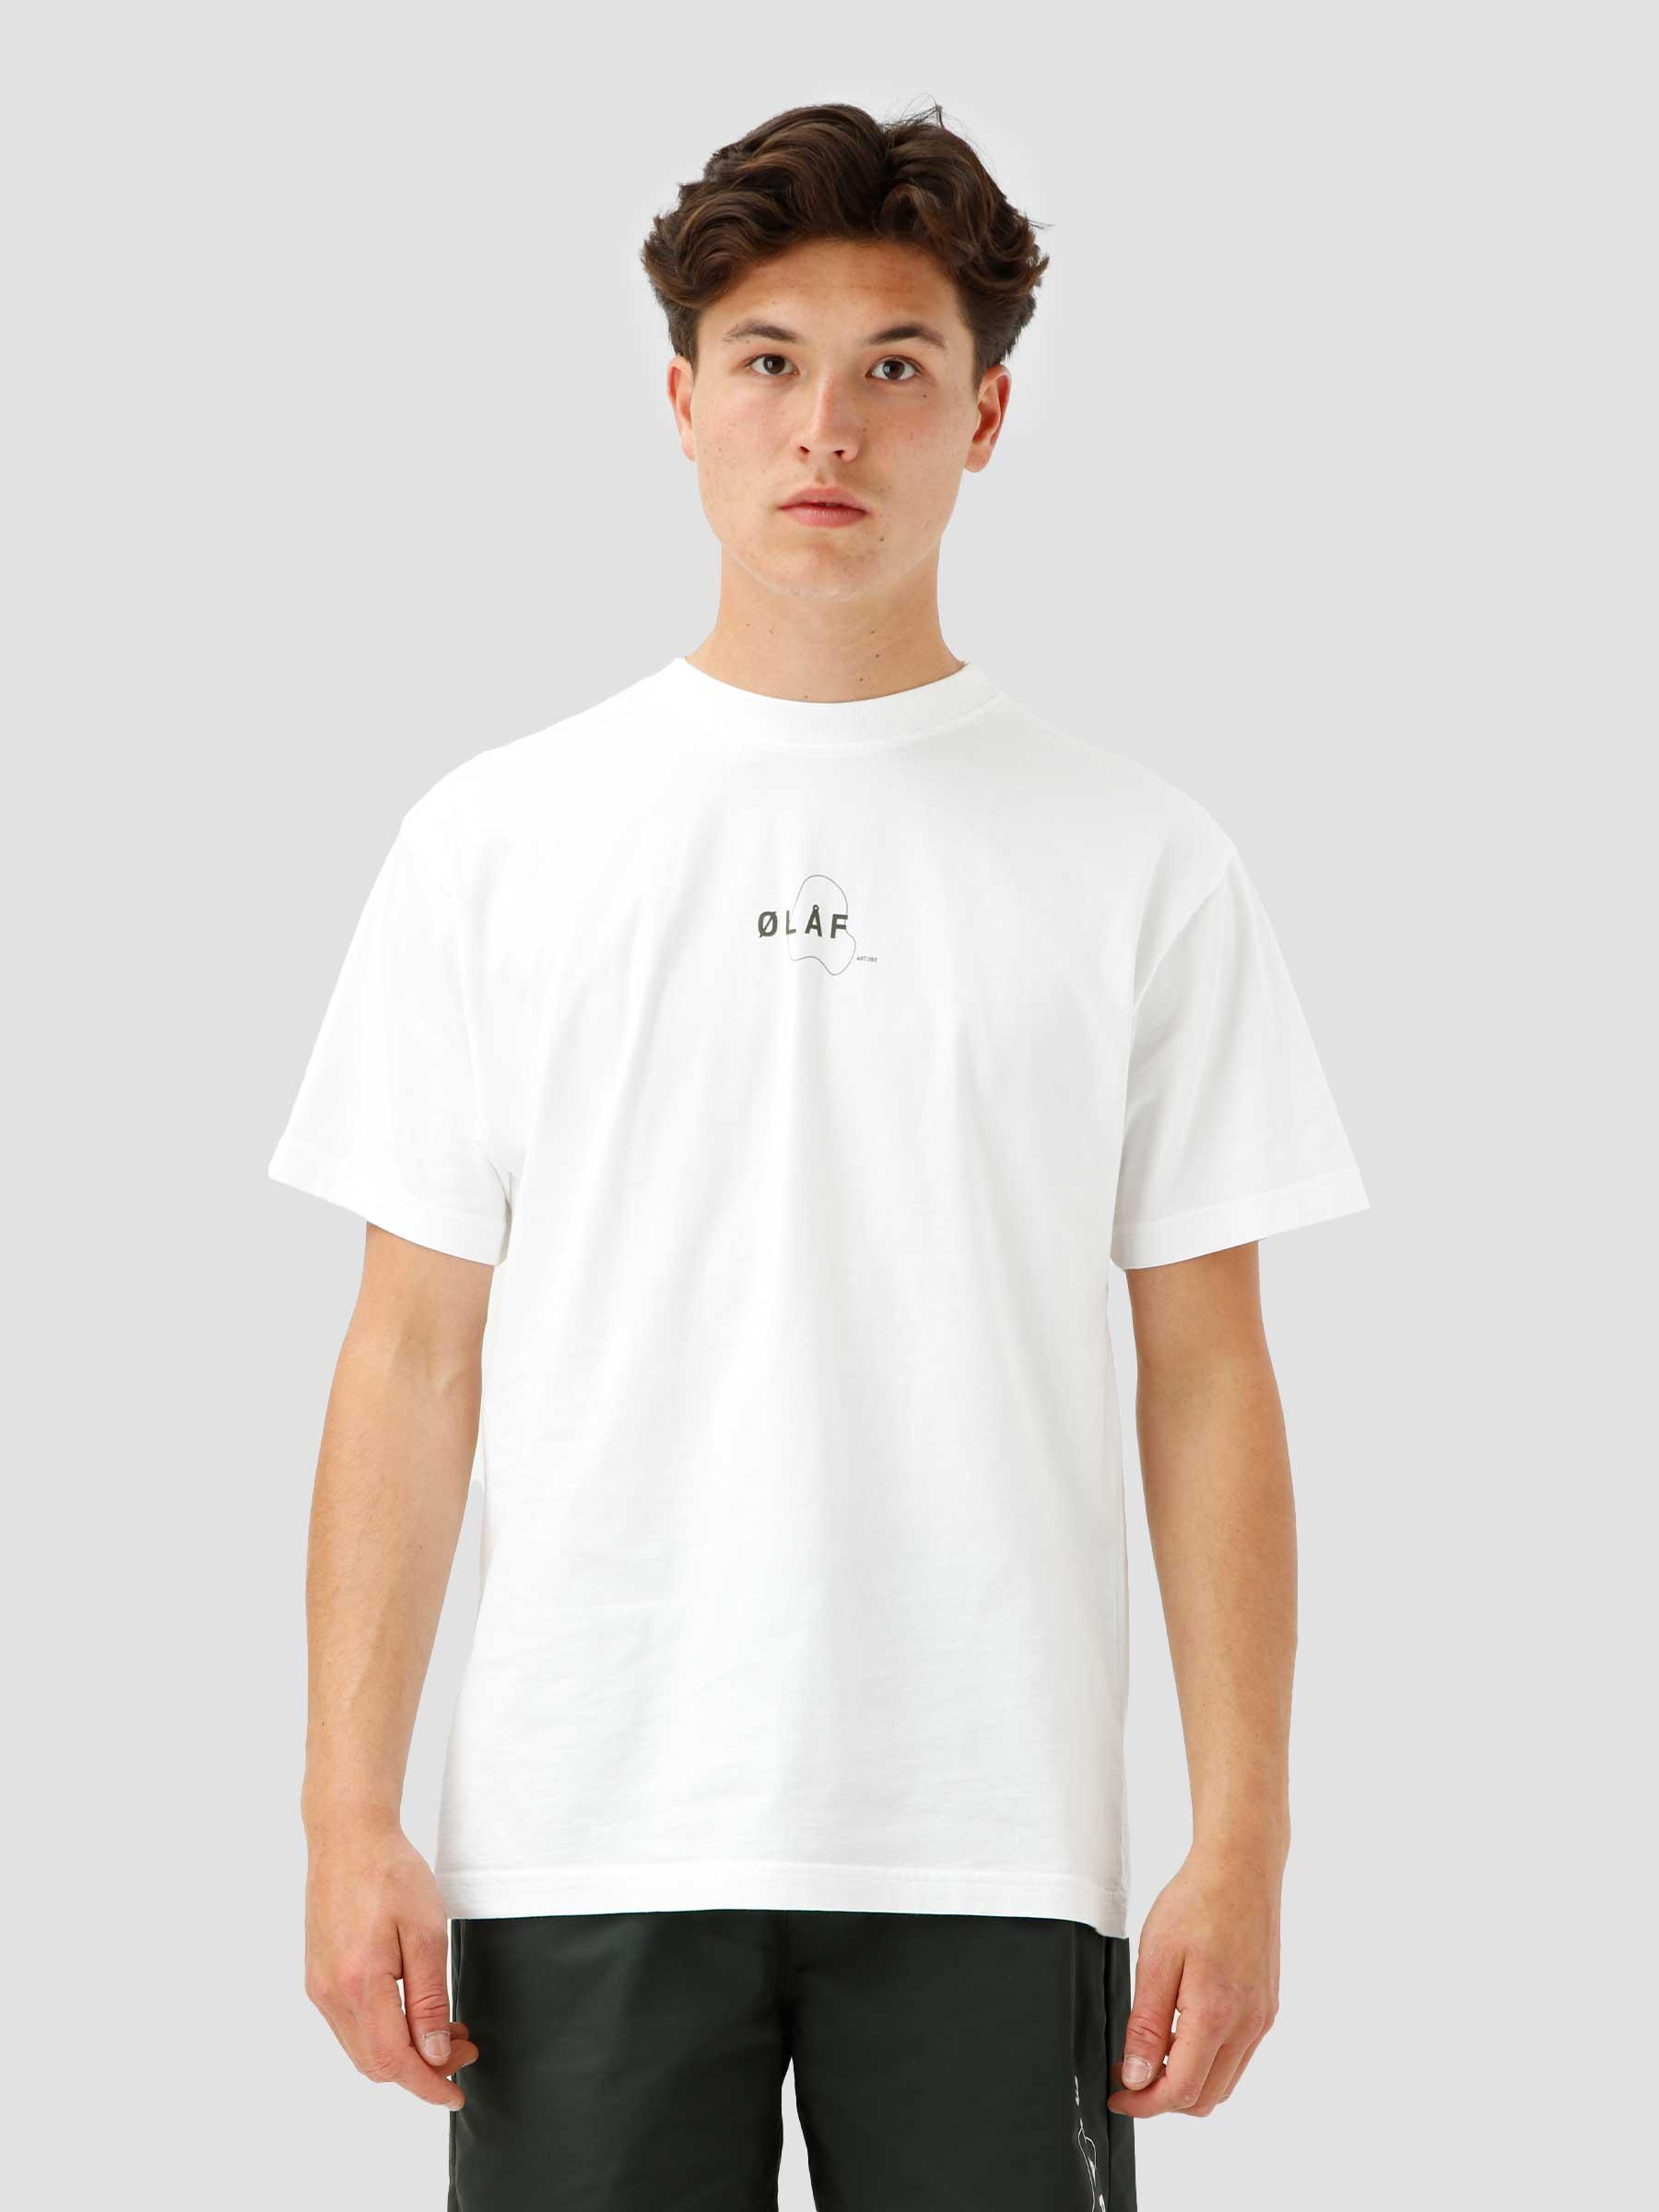 Double Mirror T-shirt Optical White FT22 101